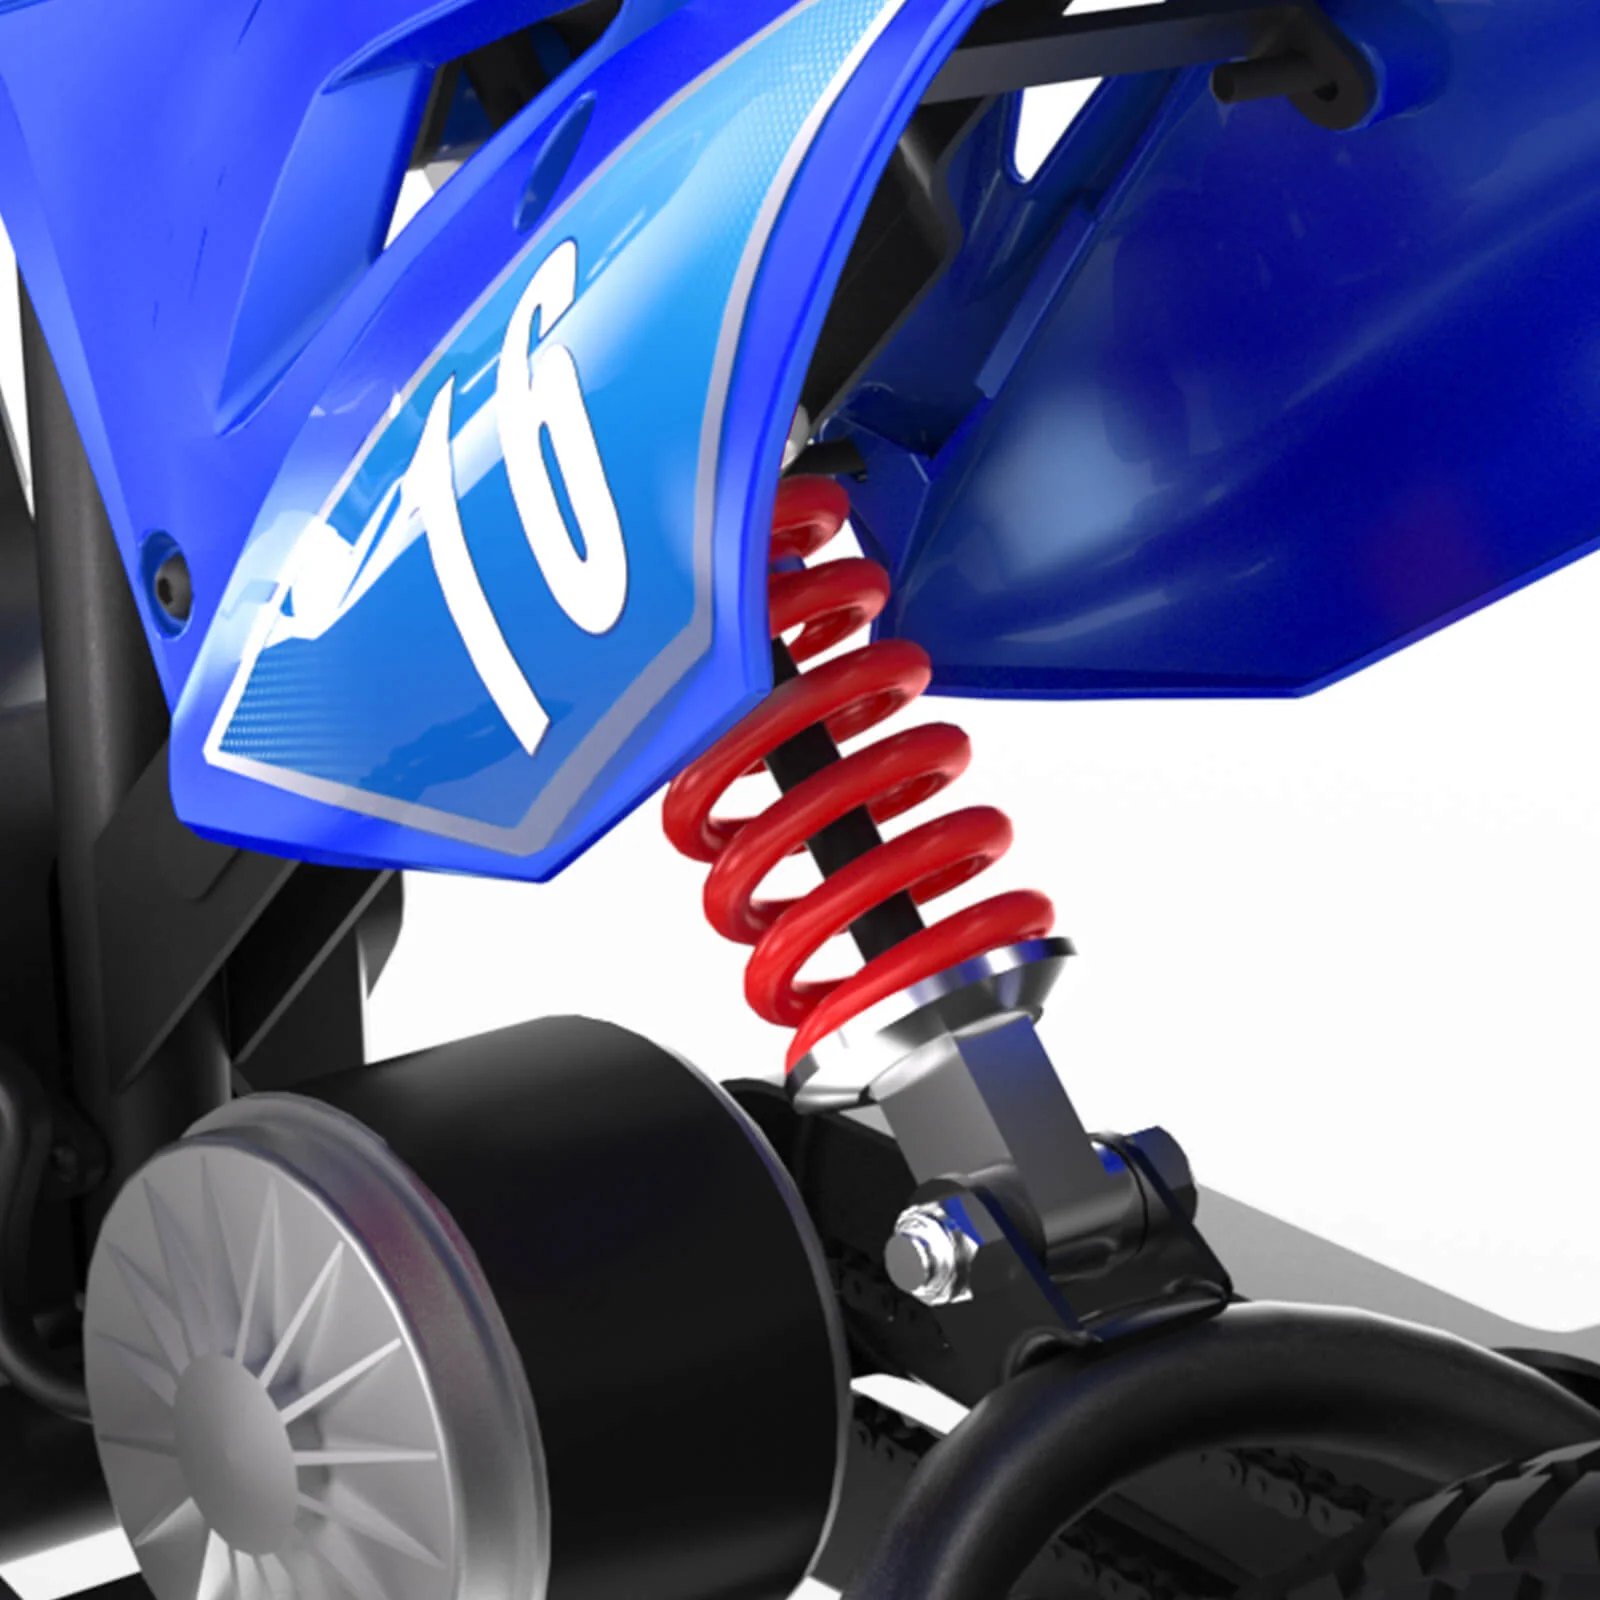 Hiboy DK1 Electric Dirt Bike For Kids Ages 3-10-Adventure Sports Innovation-dirt-bike-rear-shock-absorber